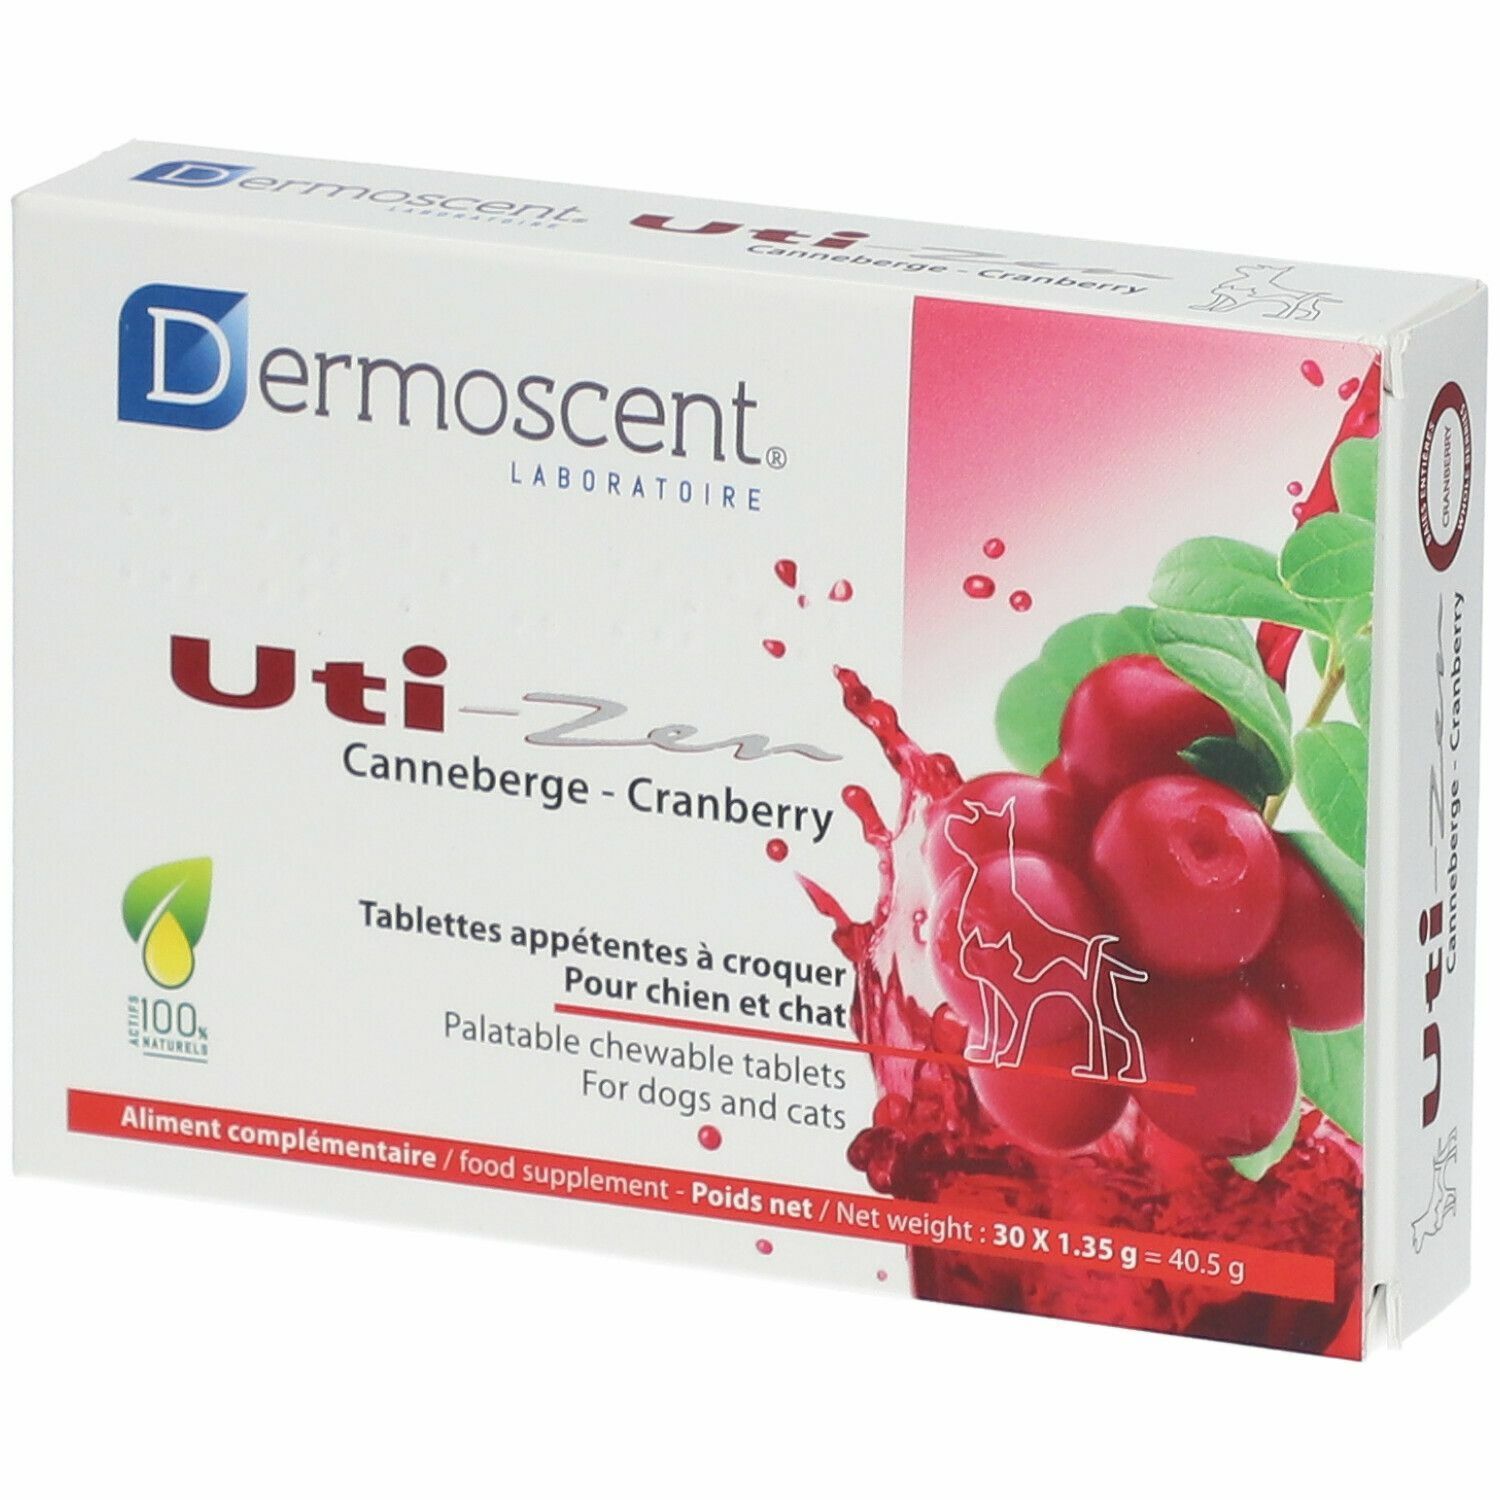 Dermoscent® LABORATOIRE Uti-Zen Cranberry